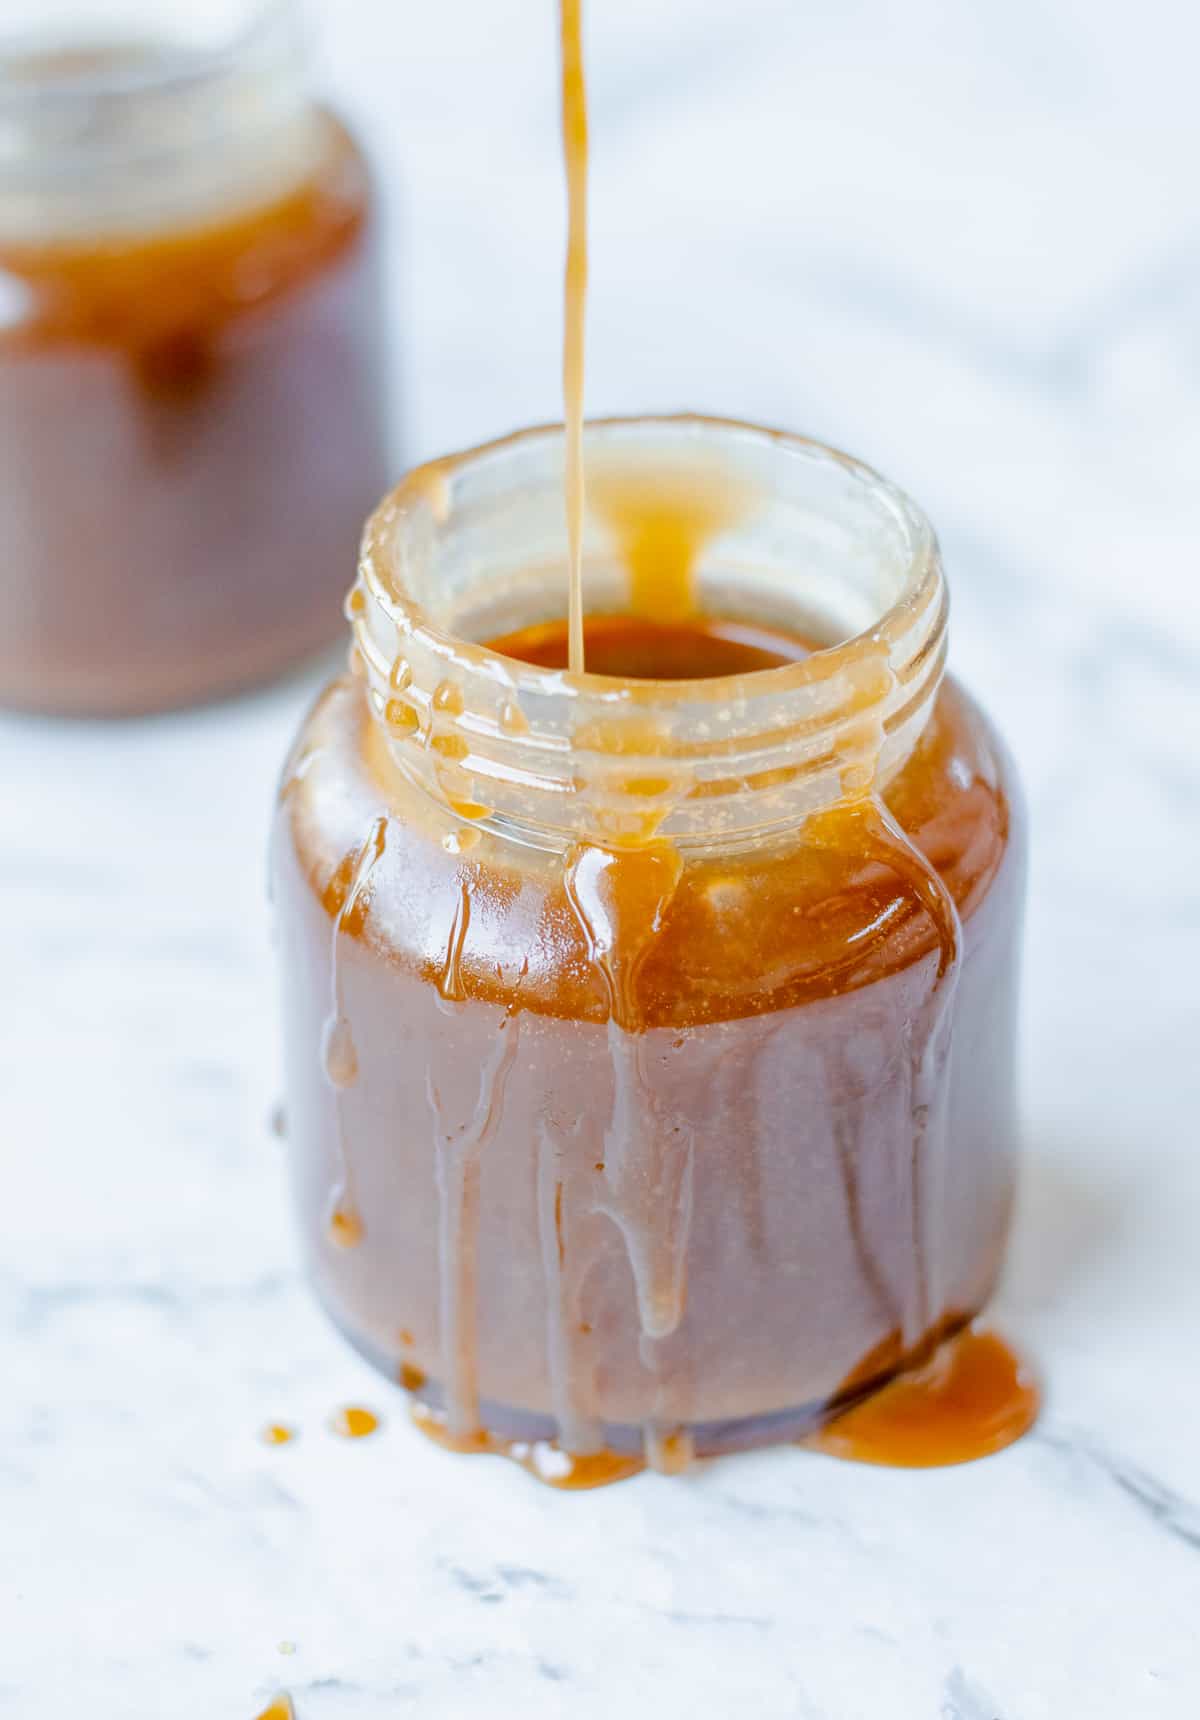 Salted Caramel Sauce in glass jar